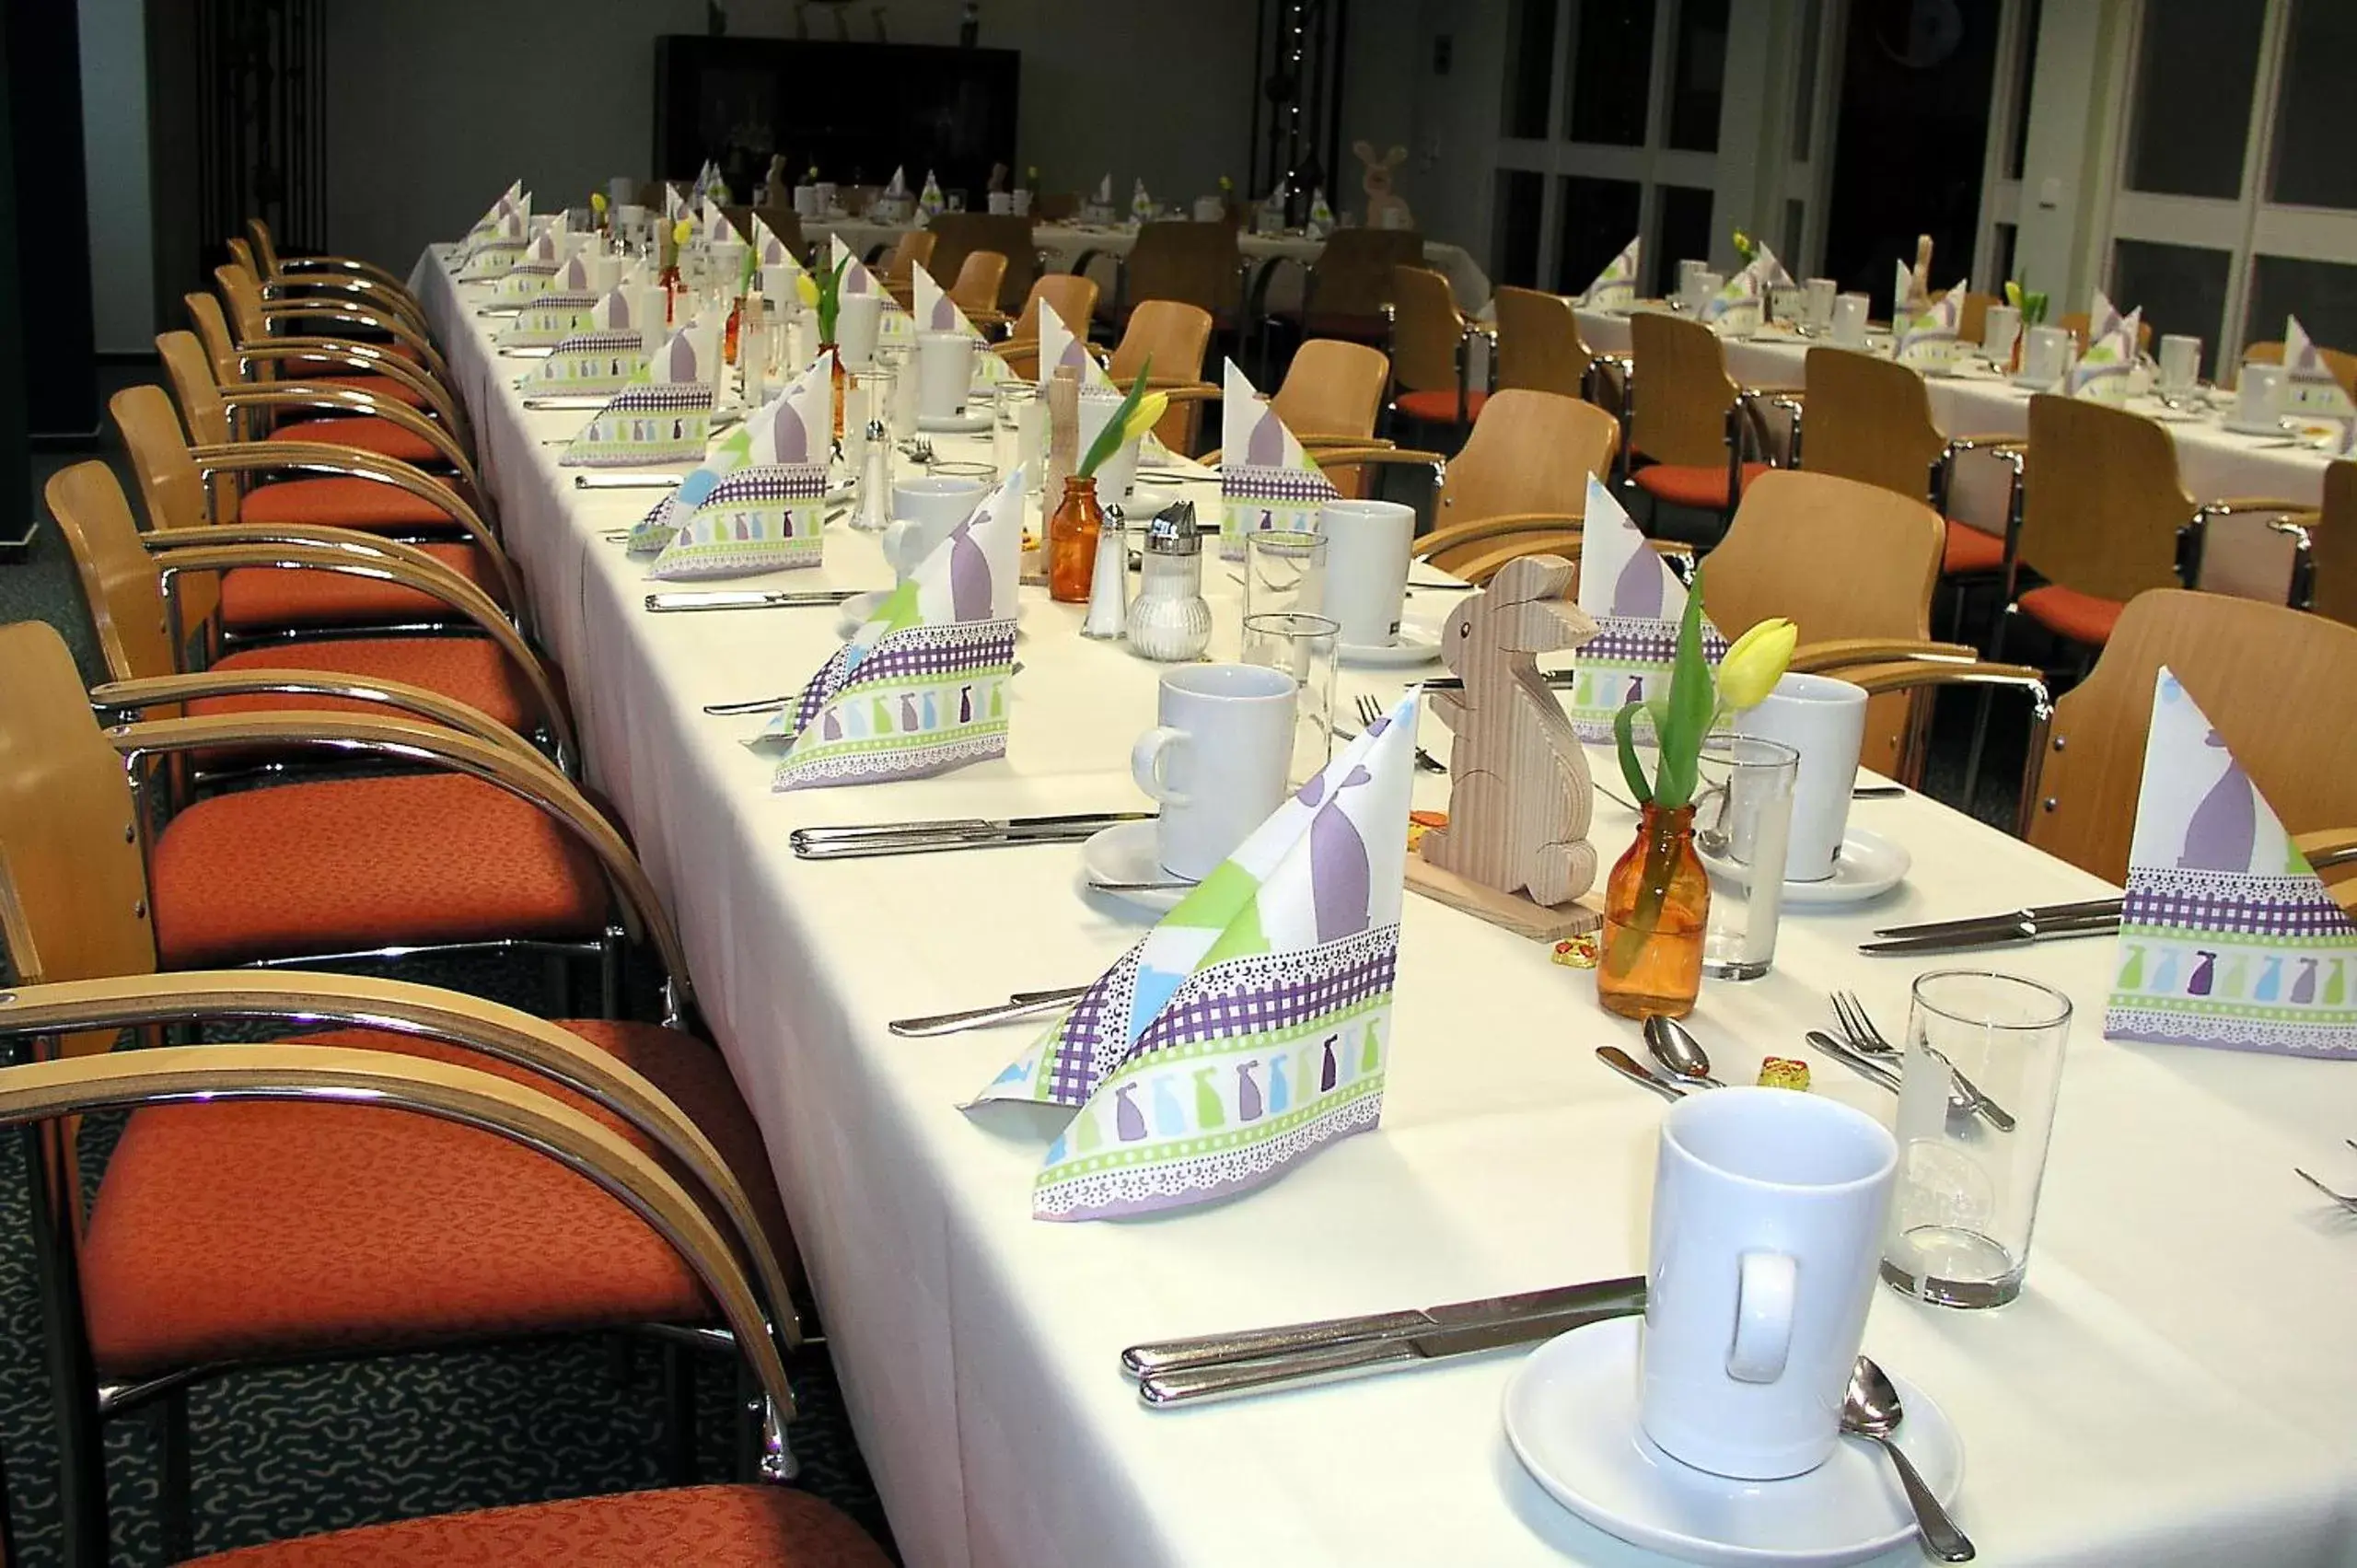 Banquet/Function facilities, Restaurant/Places to Eat in Savoy Hotel Bad Mergentheim